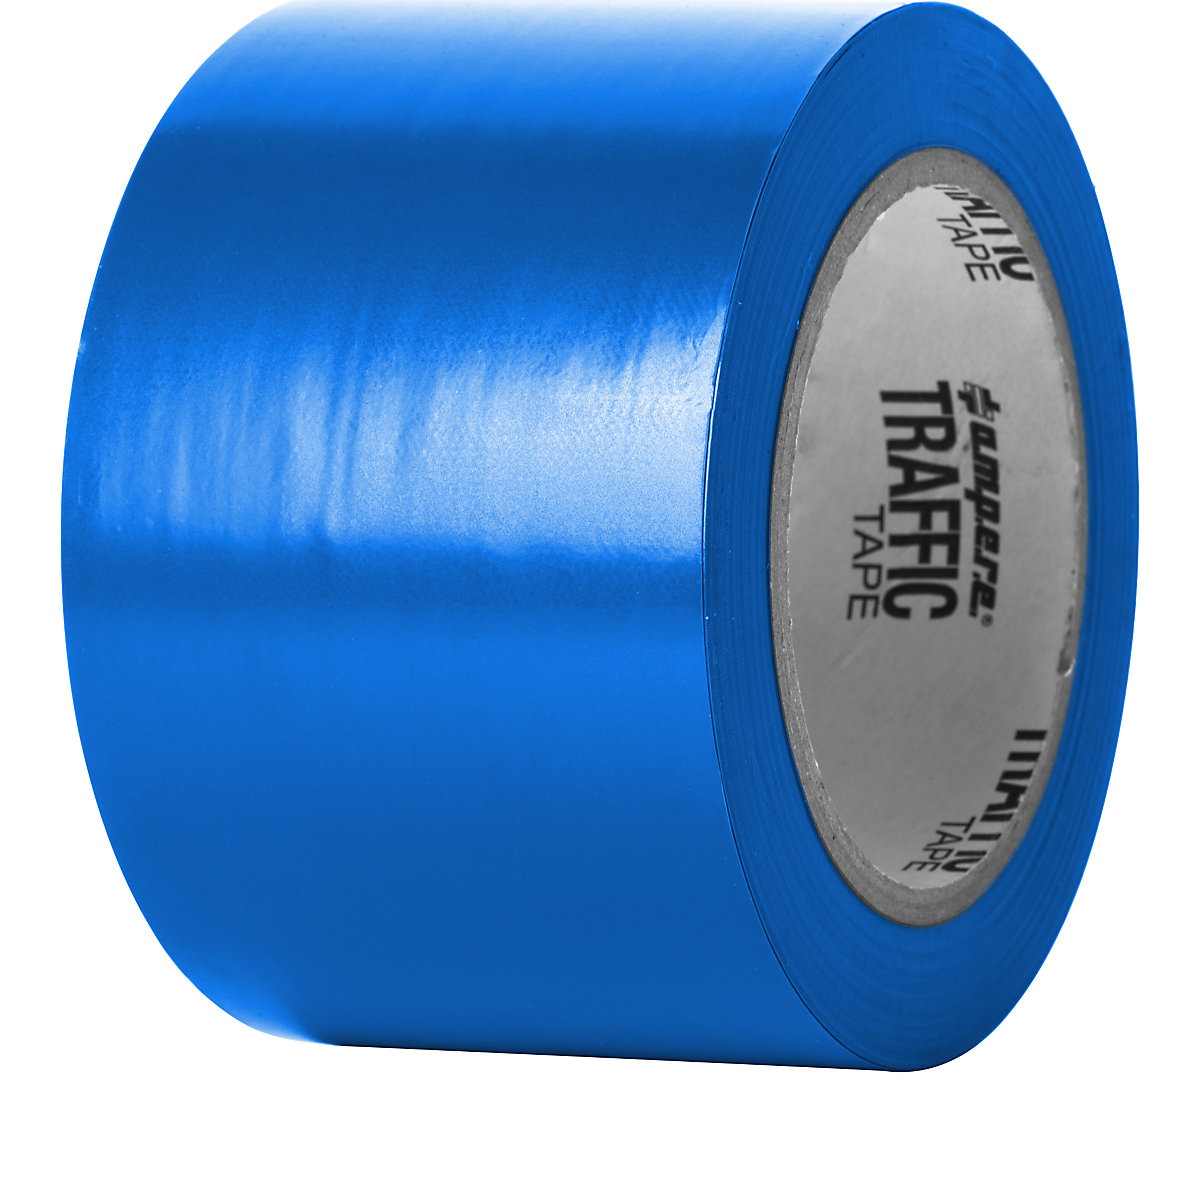 Floor marking tape – Ampere